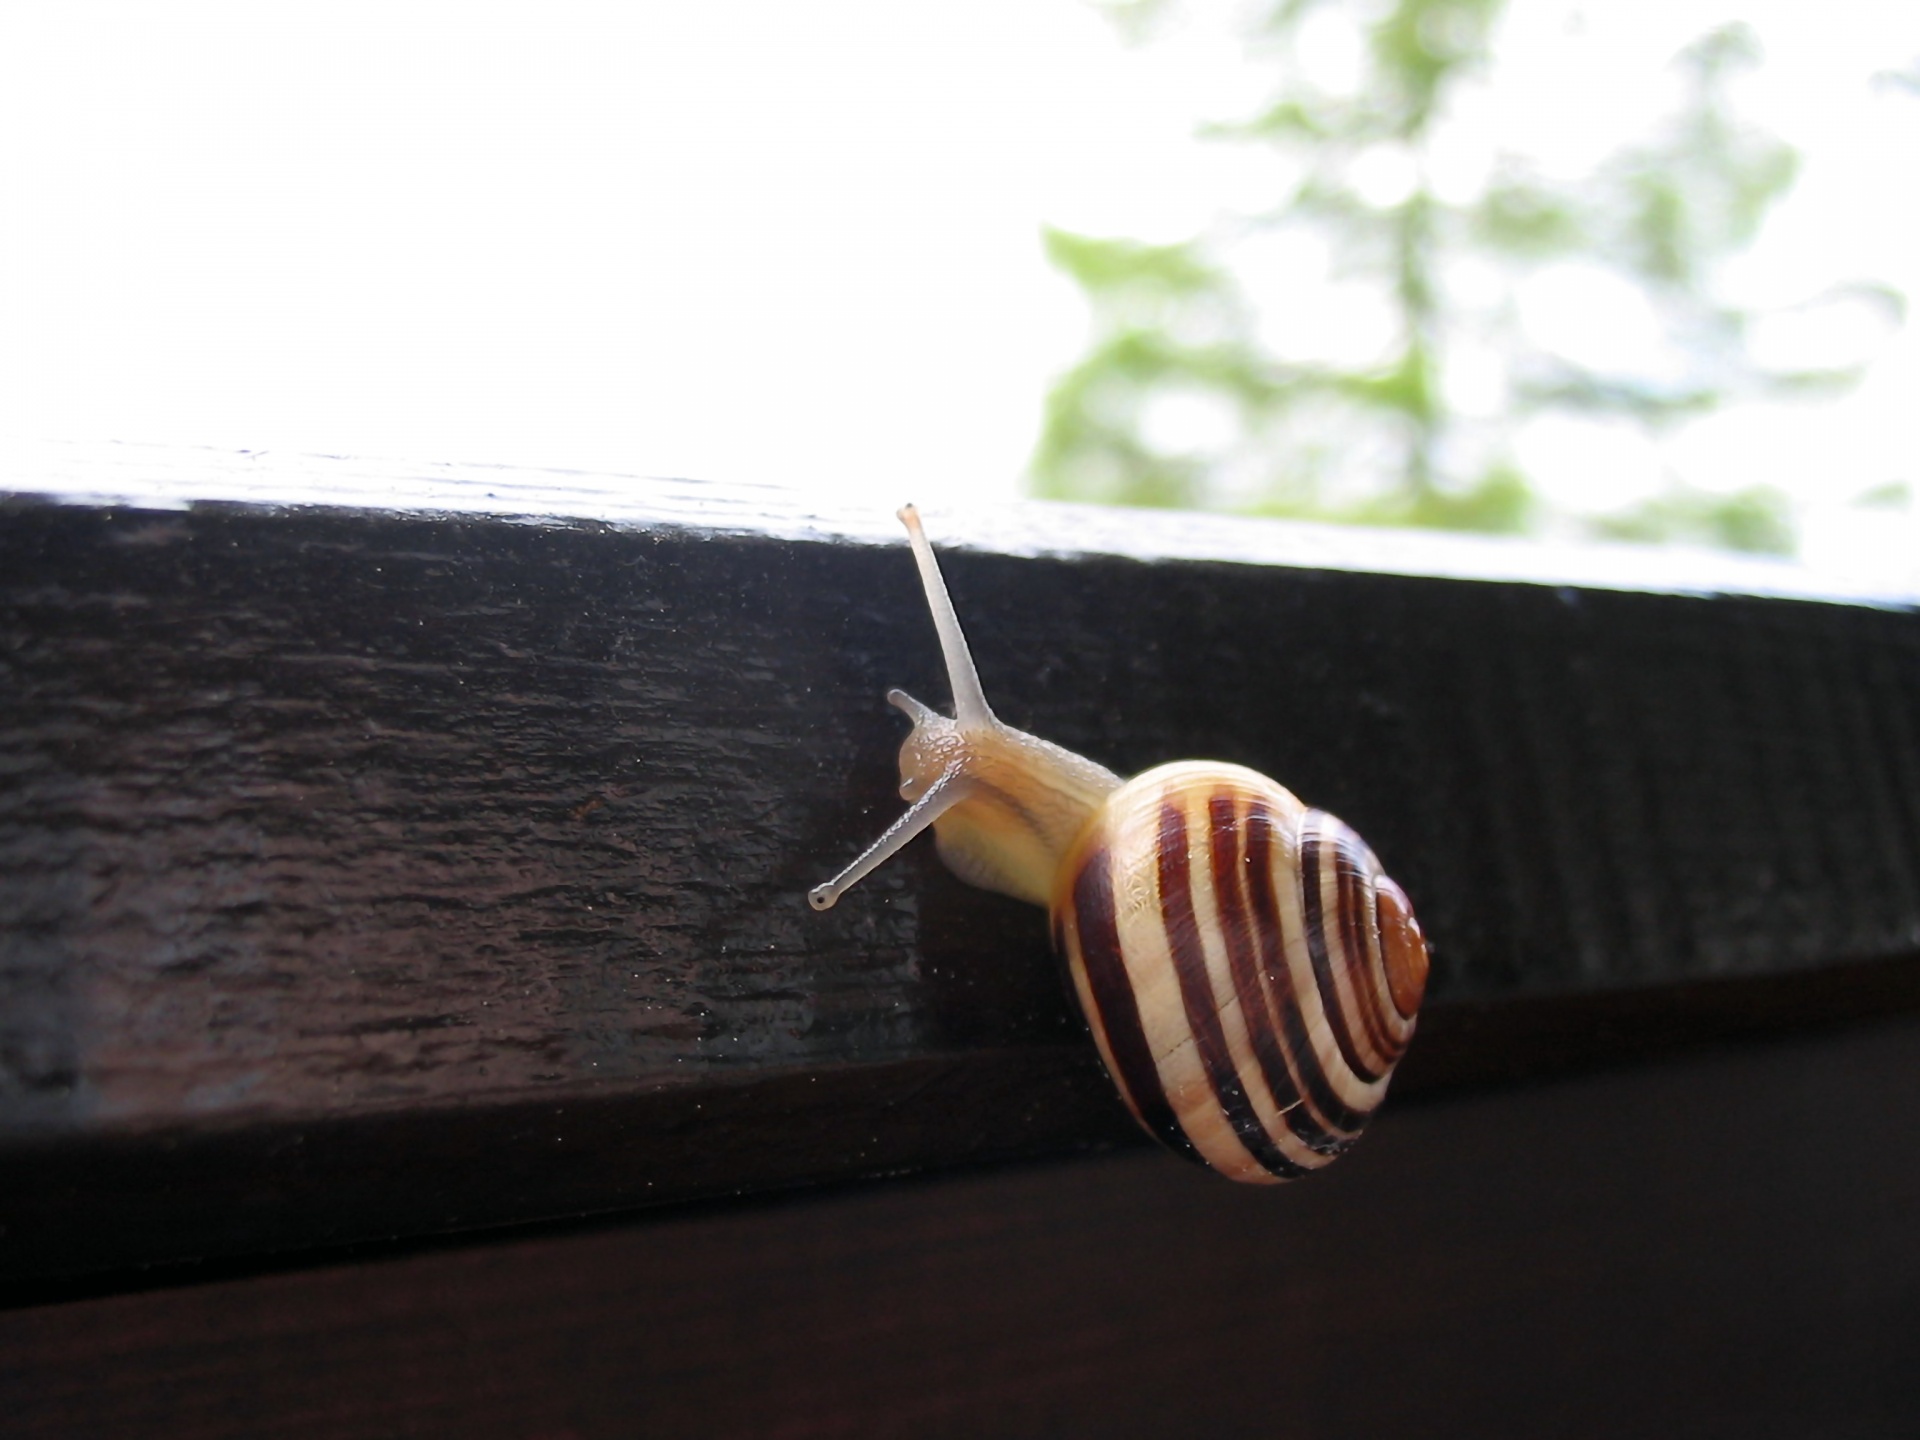 Snail crawling along a wooden beam